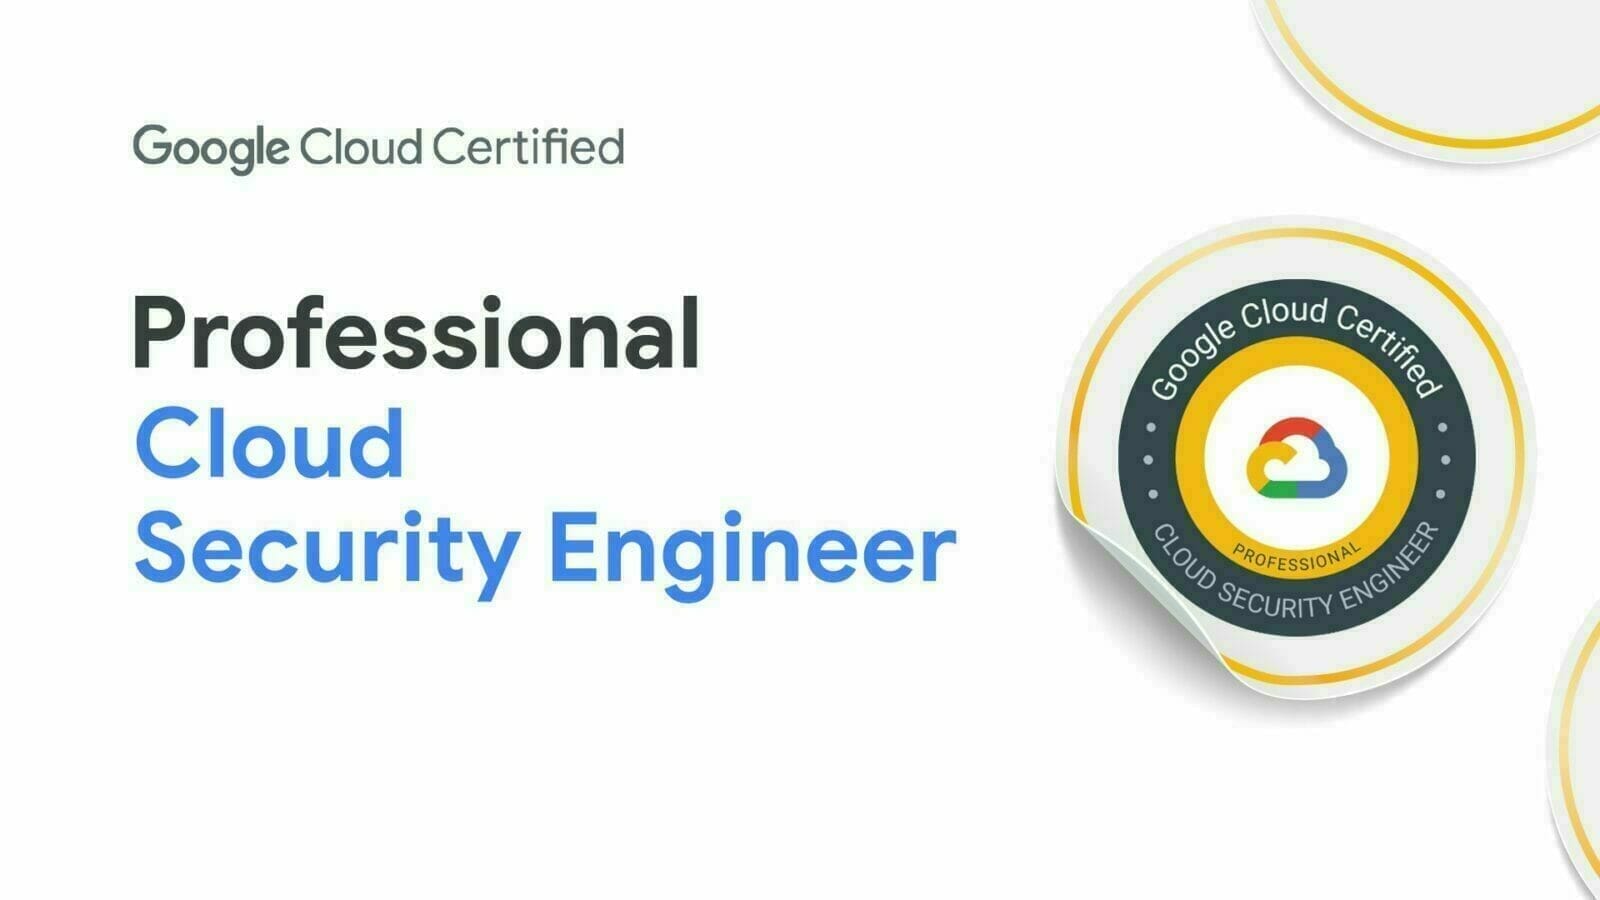 Google Cloud Certified - Professional Security Engineer 認定資格バッジ